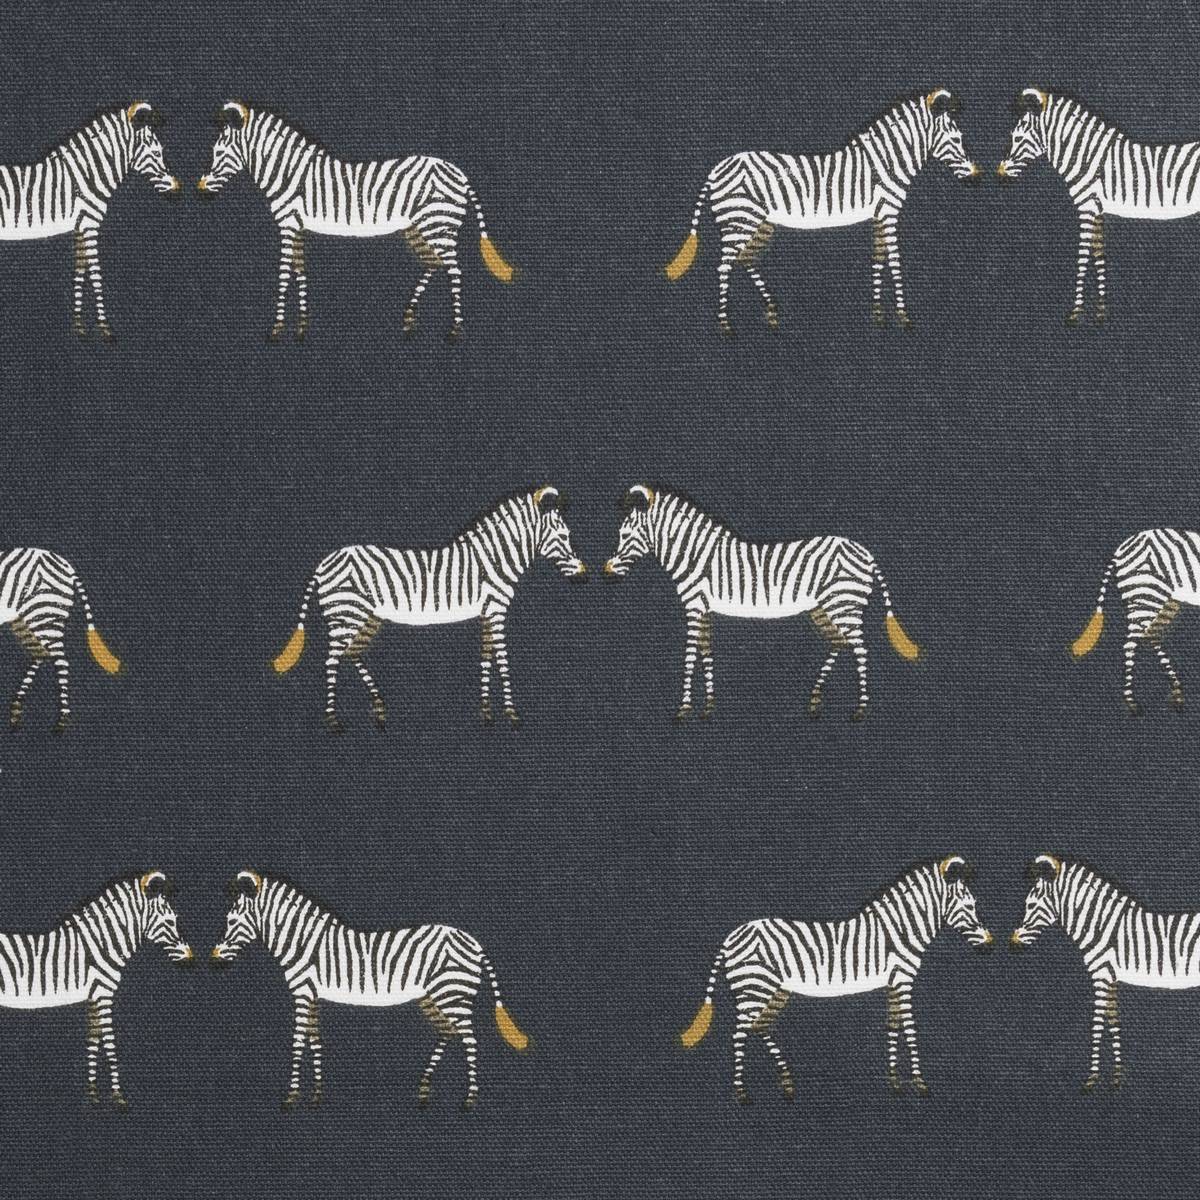 Zebra Fabric by Sophie Allport